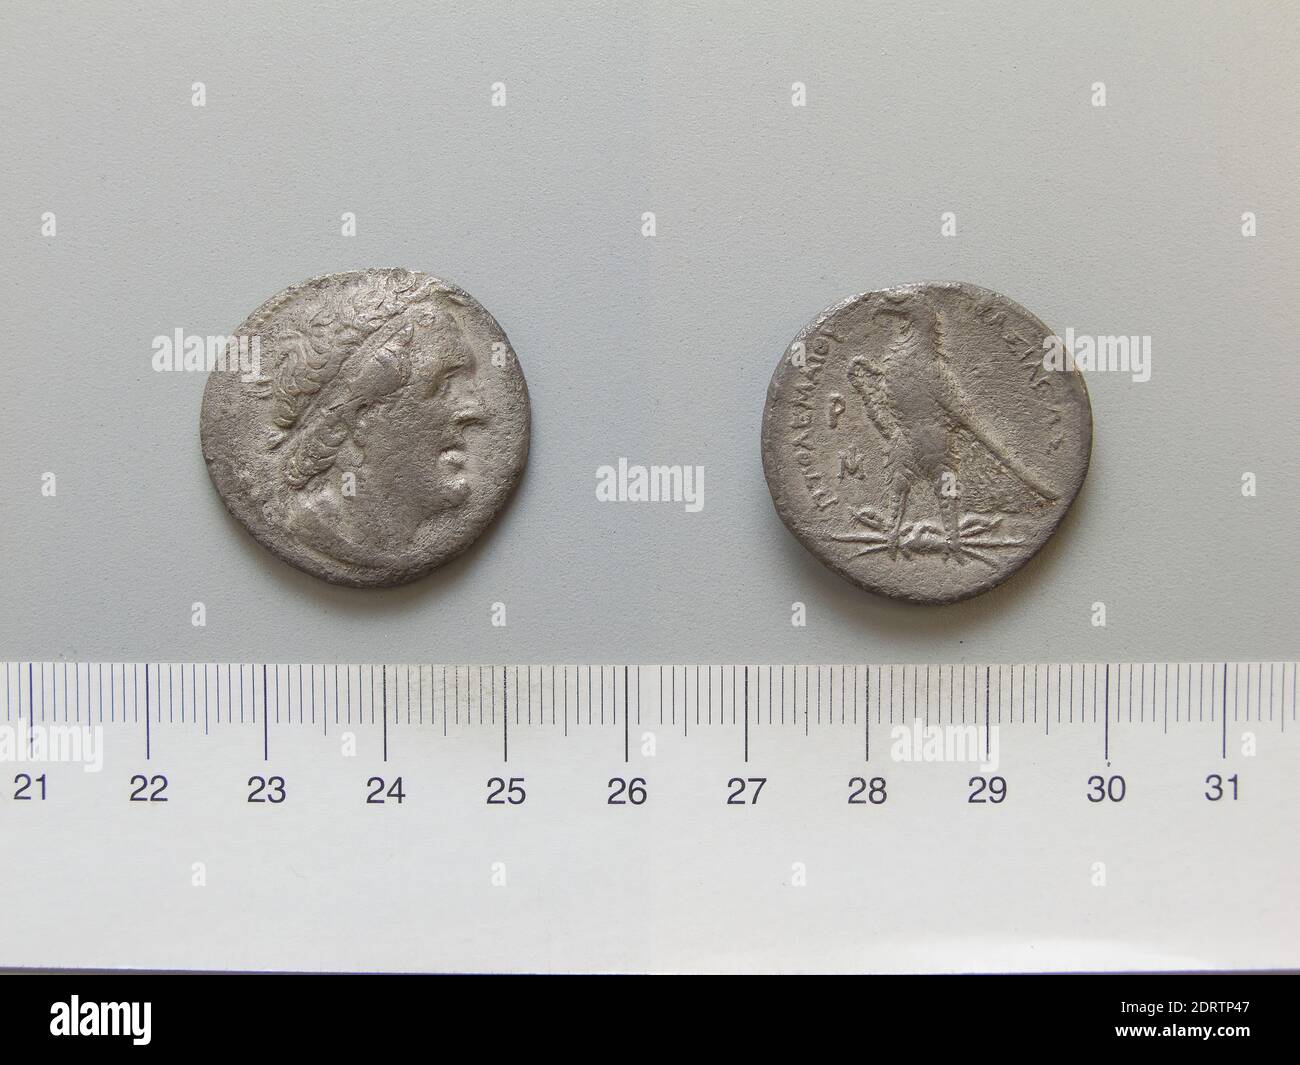 Mint: Egypt, Tetradrachm from Egypt, 305–285 B.C., Silver, 11.07 g, 1:00, 27.4 mm, Made in Egypt, Greek, 4th century B.C., Numismatics Stock Photo